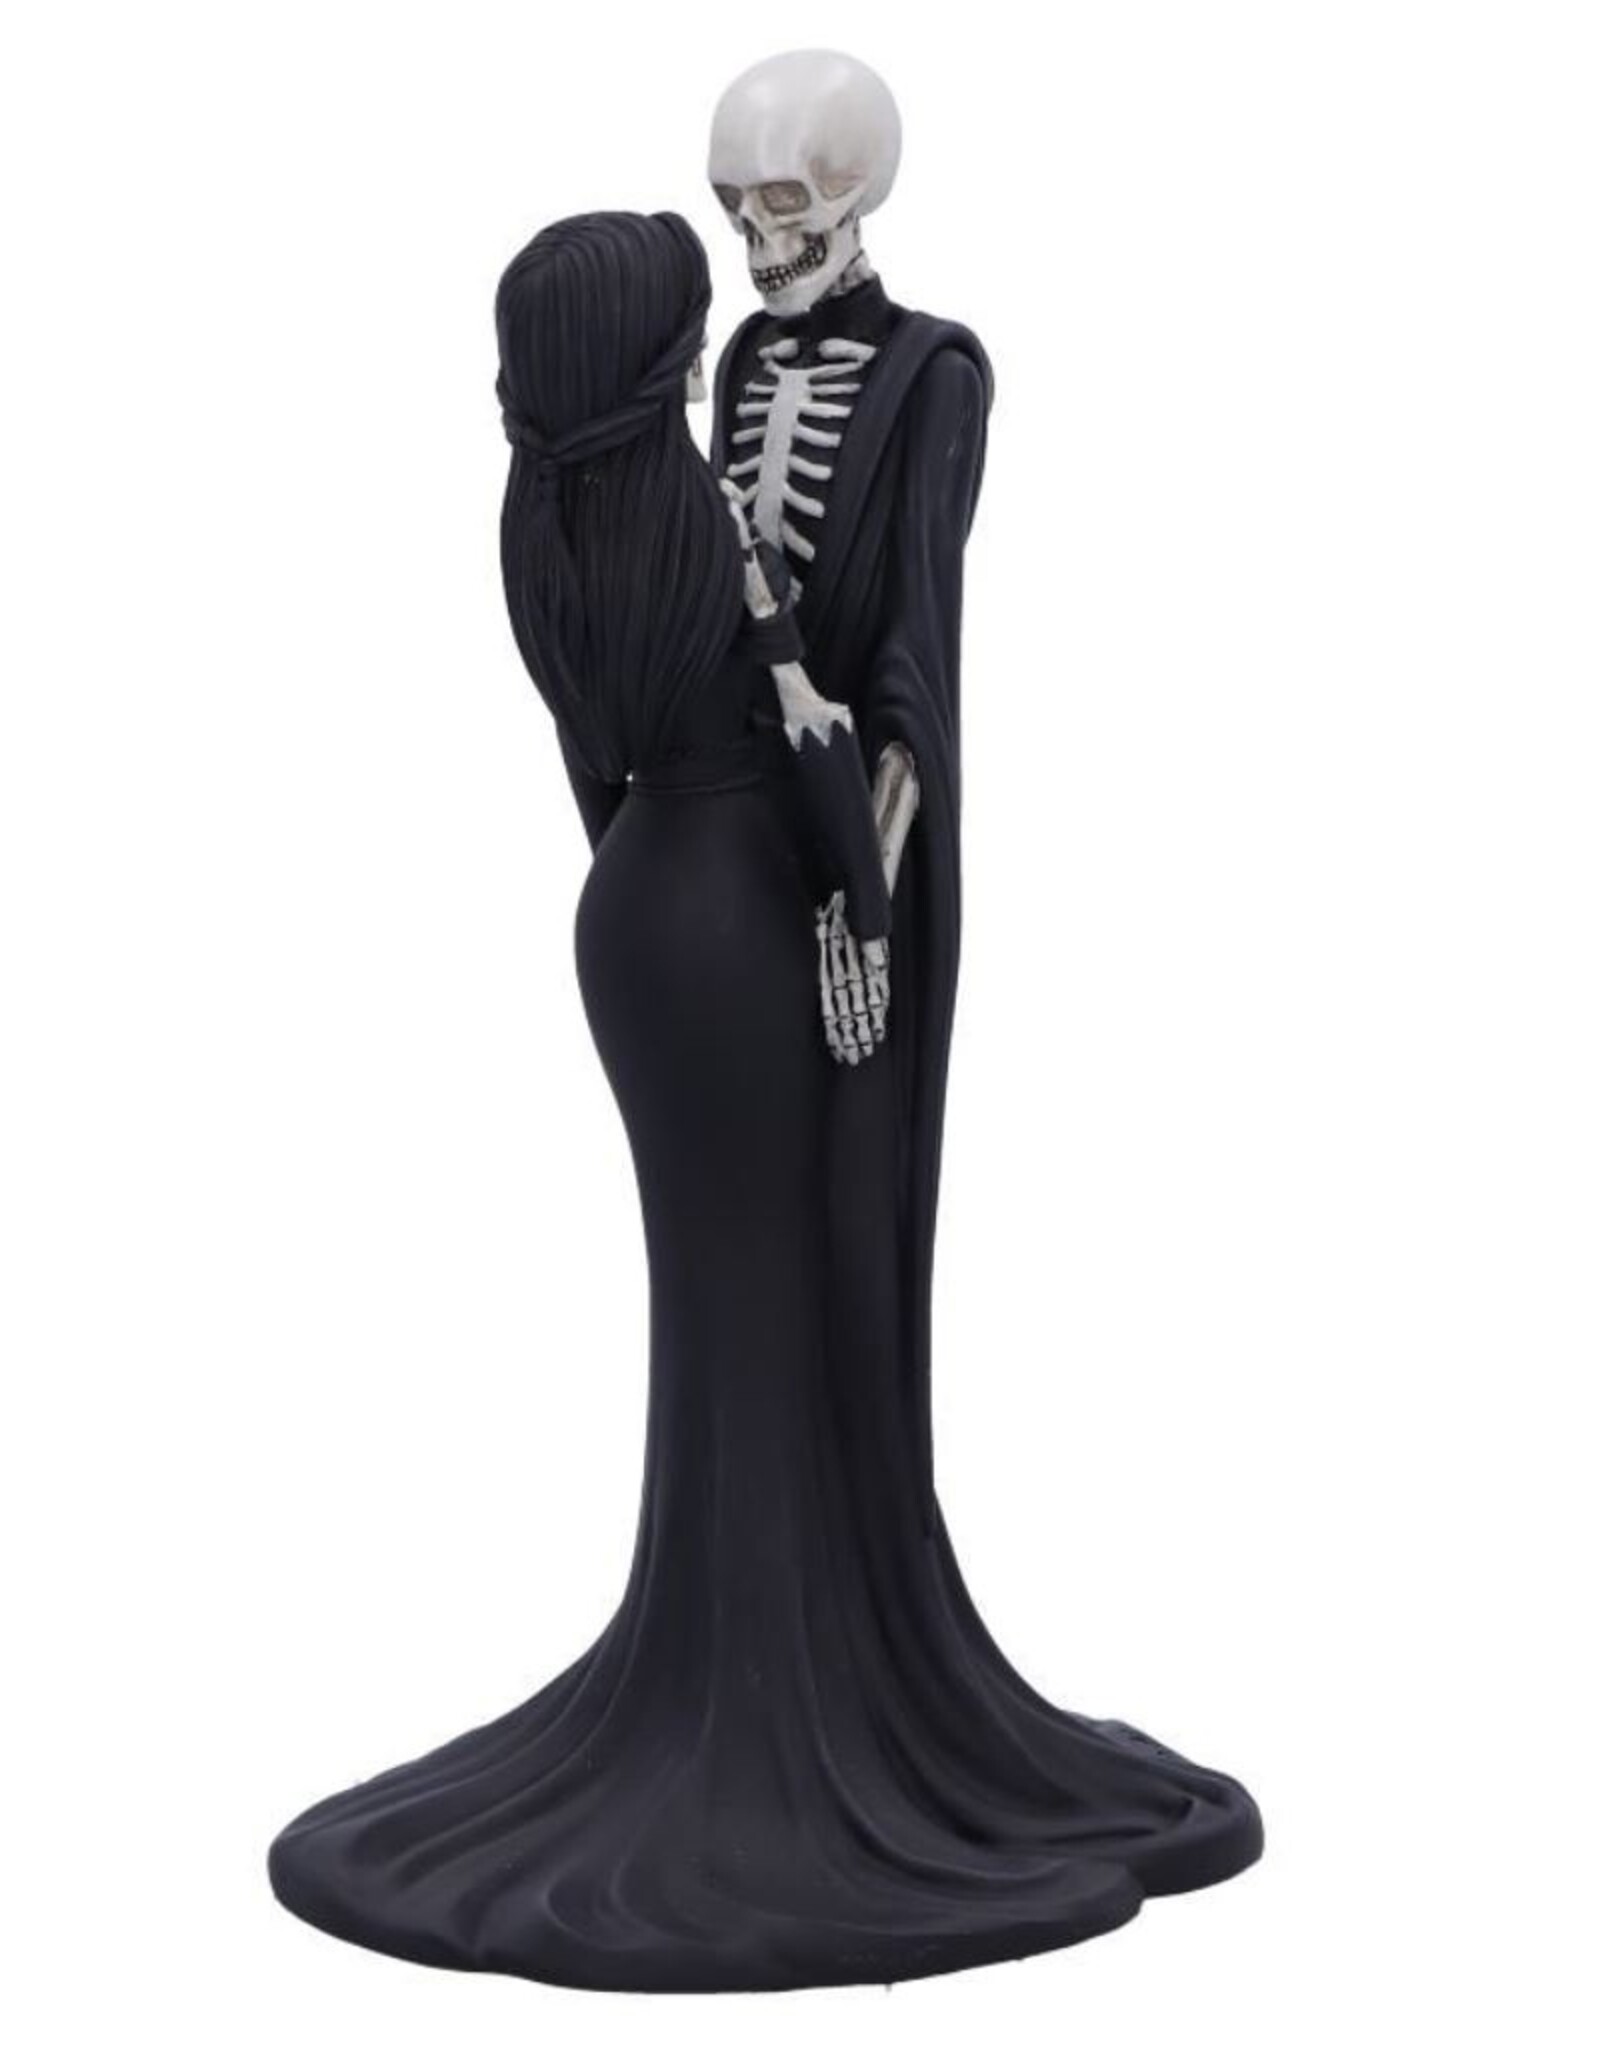 NemesisNow Giftware & Lifestyle - Eternal Vow Gothic Skeletons Couple figurine 24cm